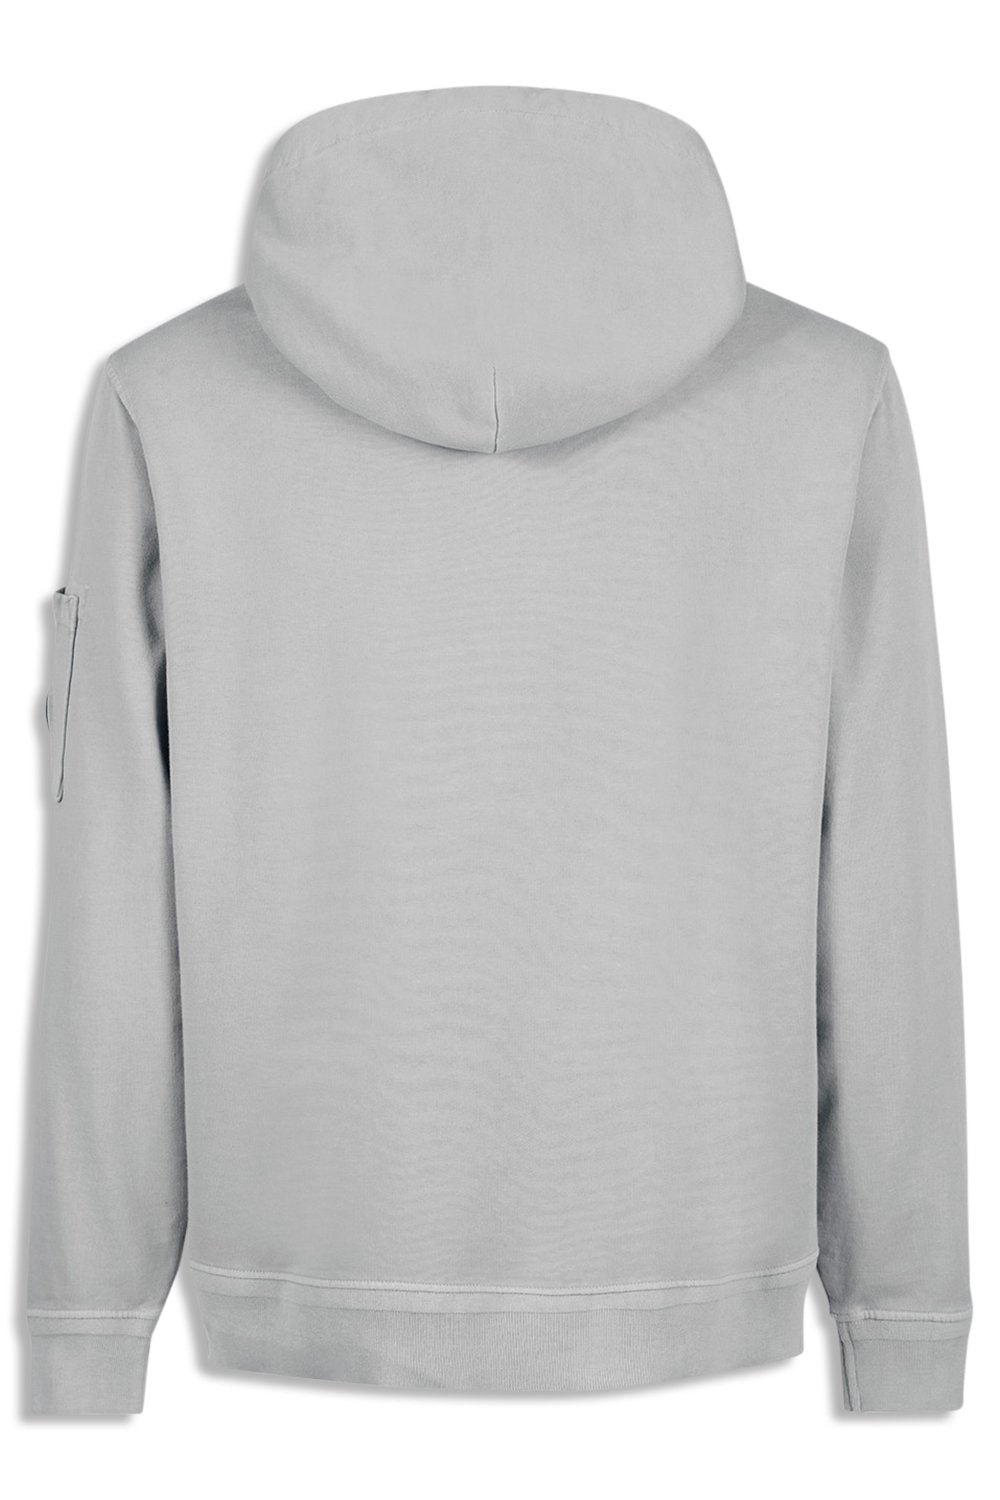 Men's C.P. Company Lens-Detail Cotton Grey Hooded sweatshirt